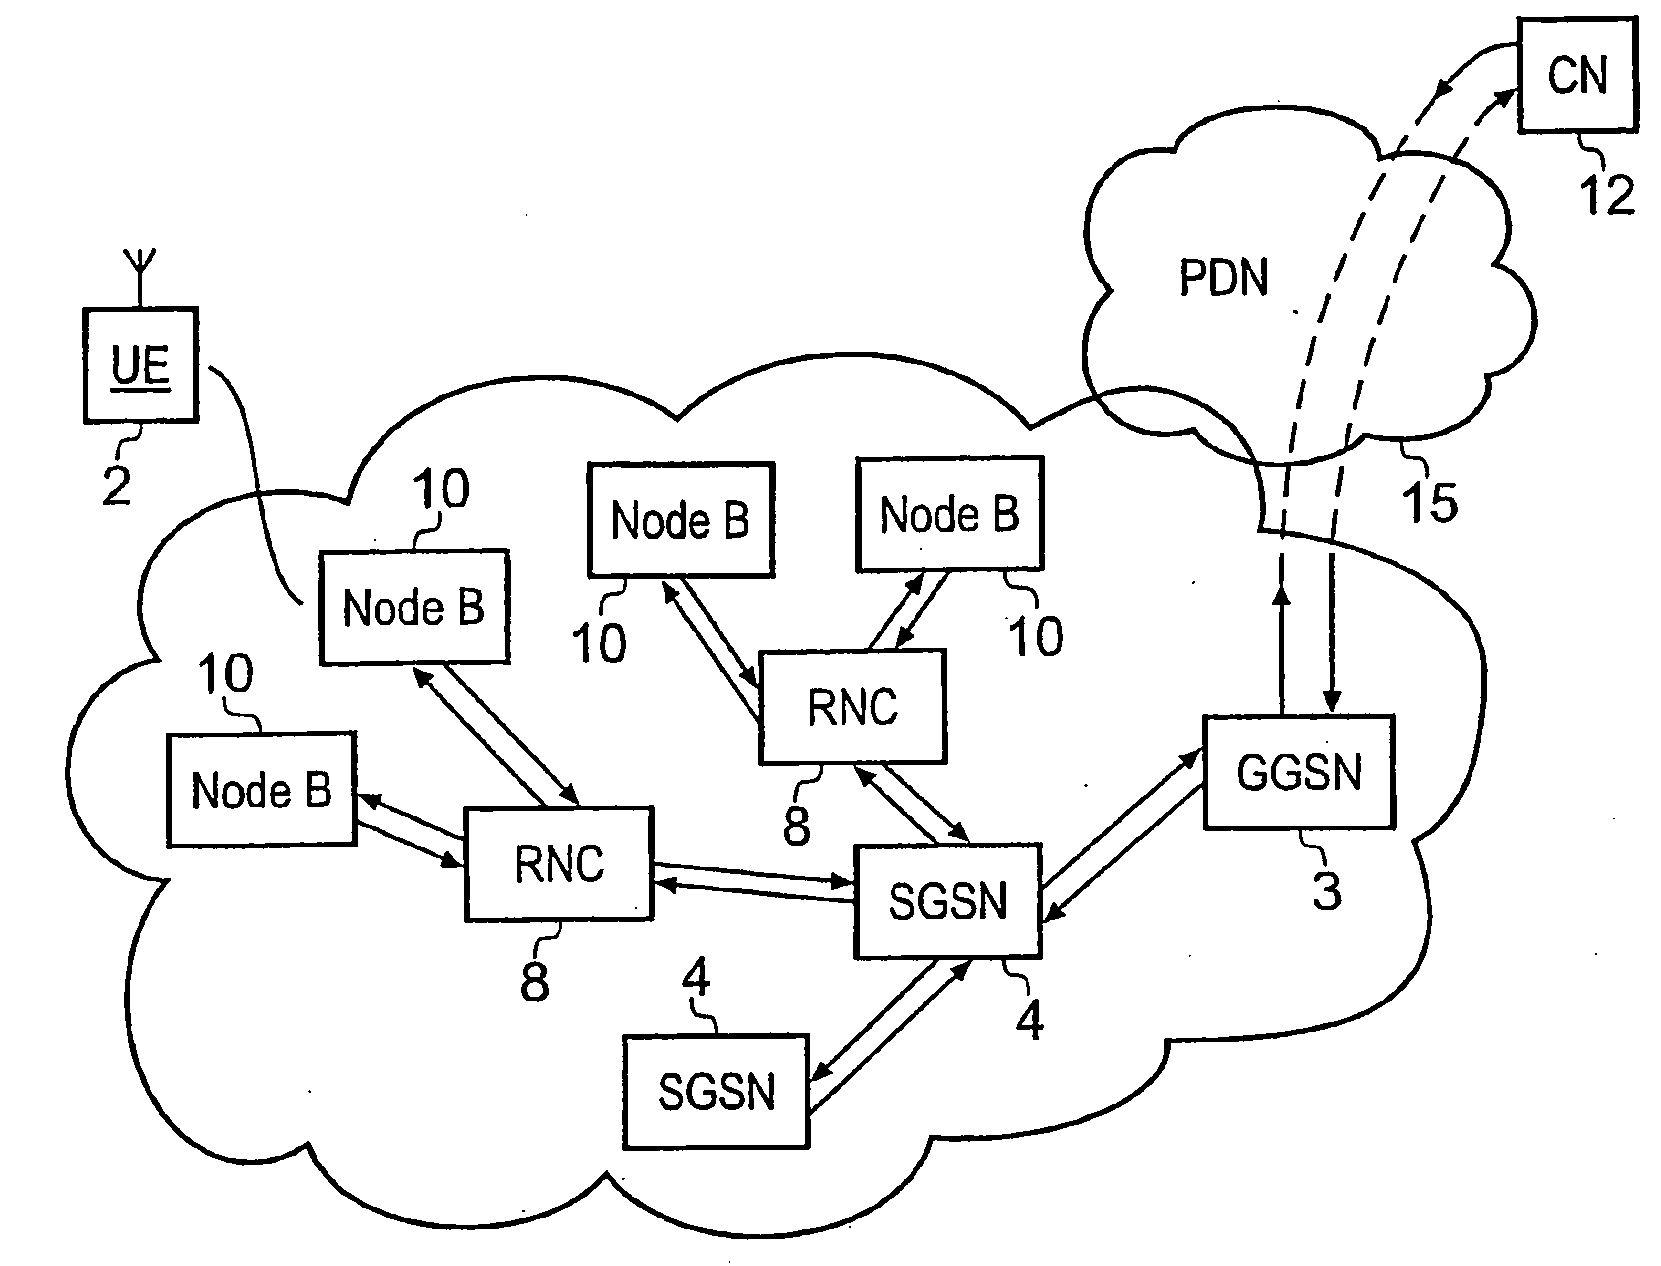 Packet radio network and method